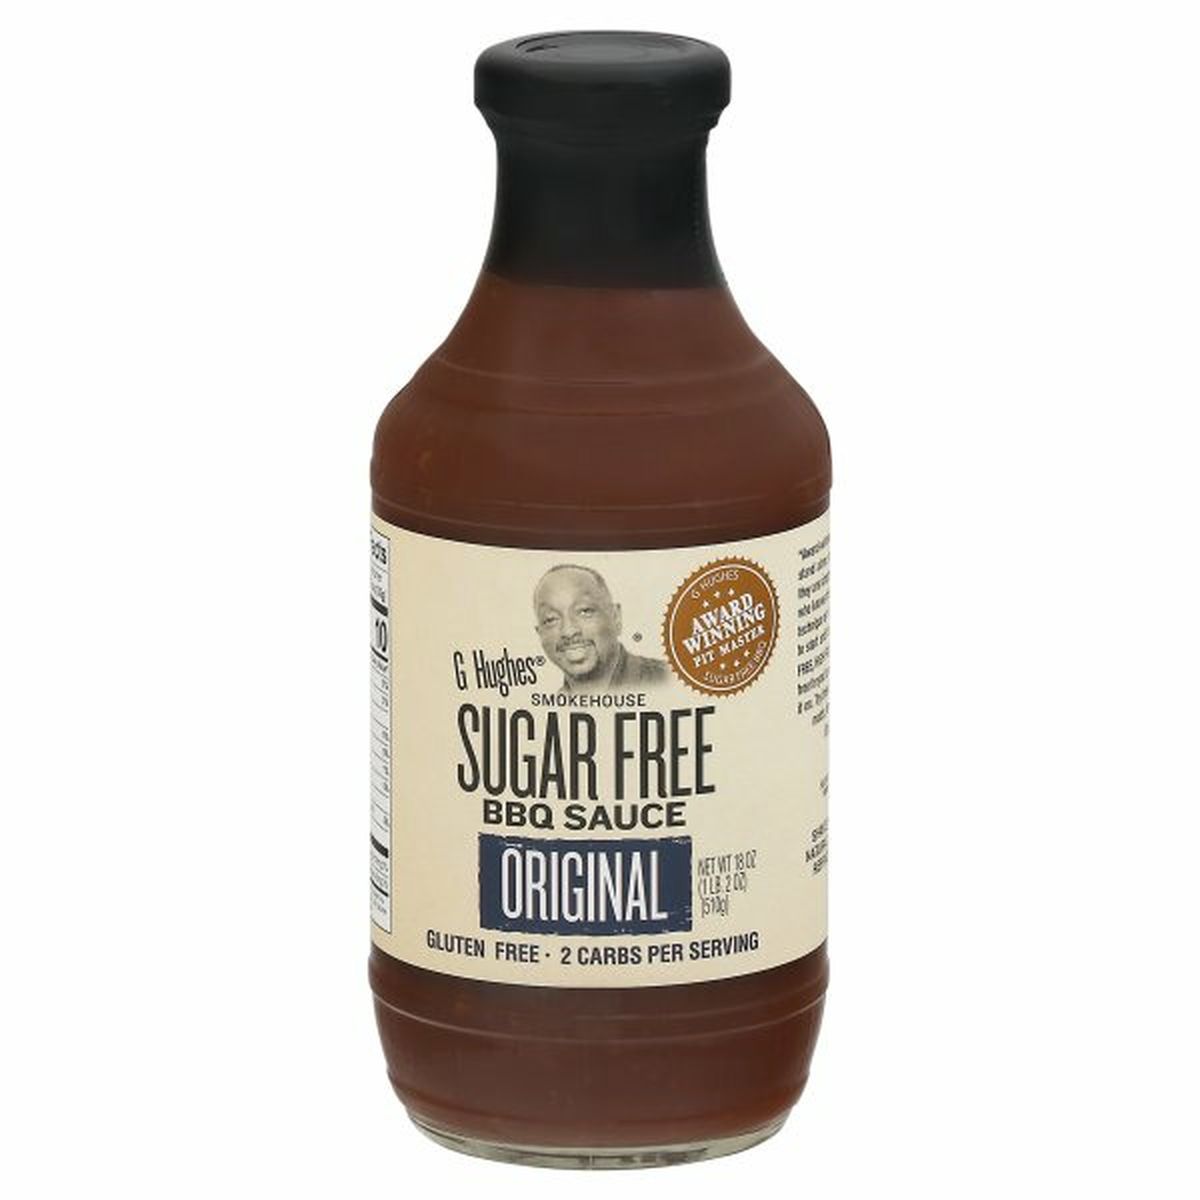 Calories in G Hughes BBQ Sauce, Sugar Free, Original, Smokehouse